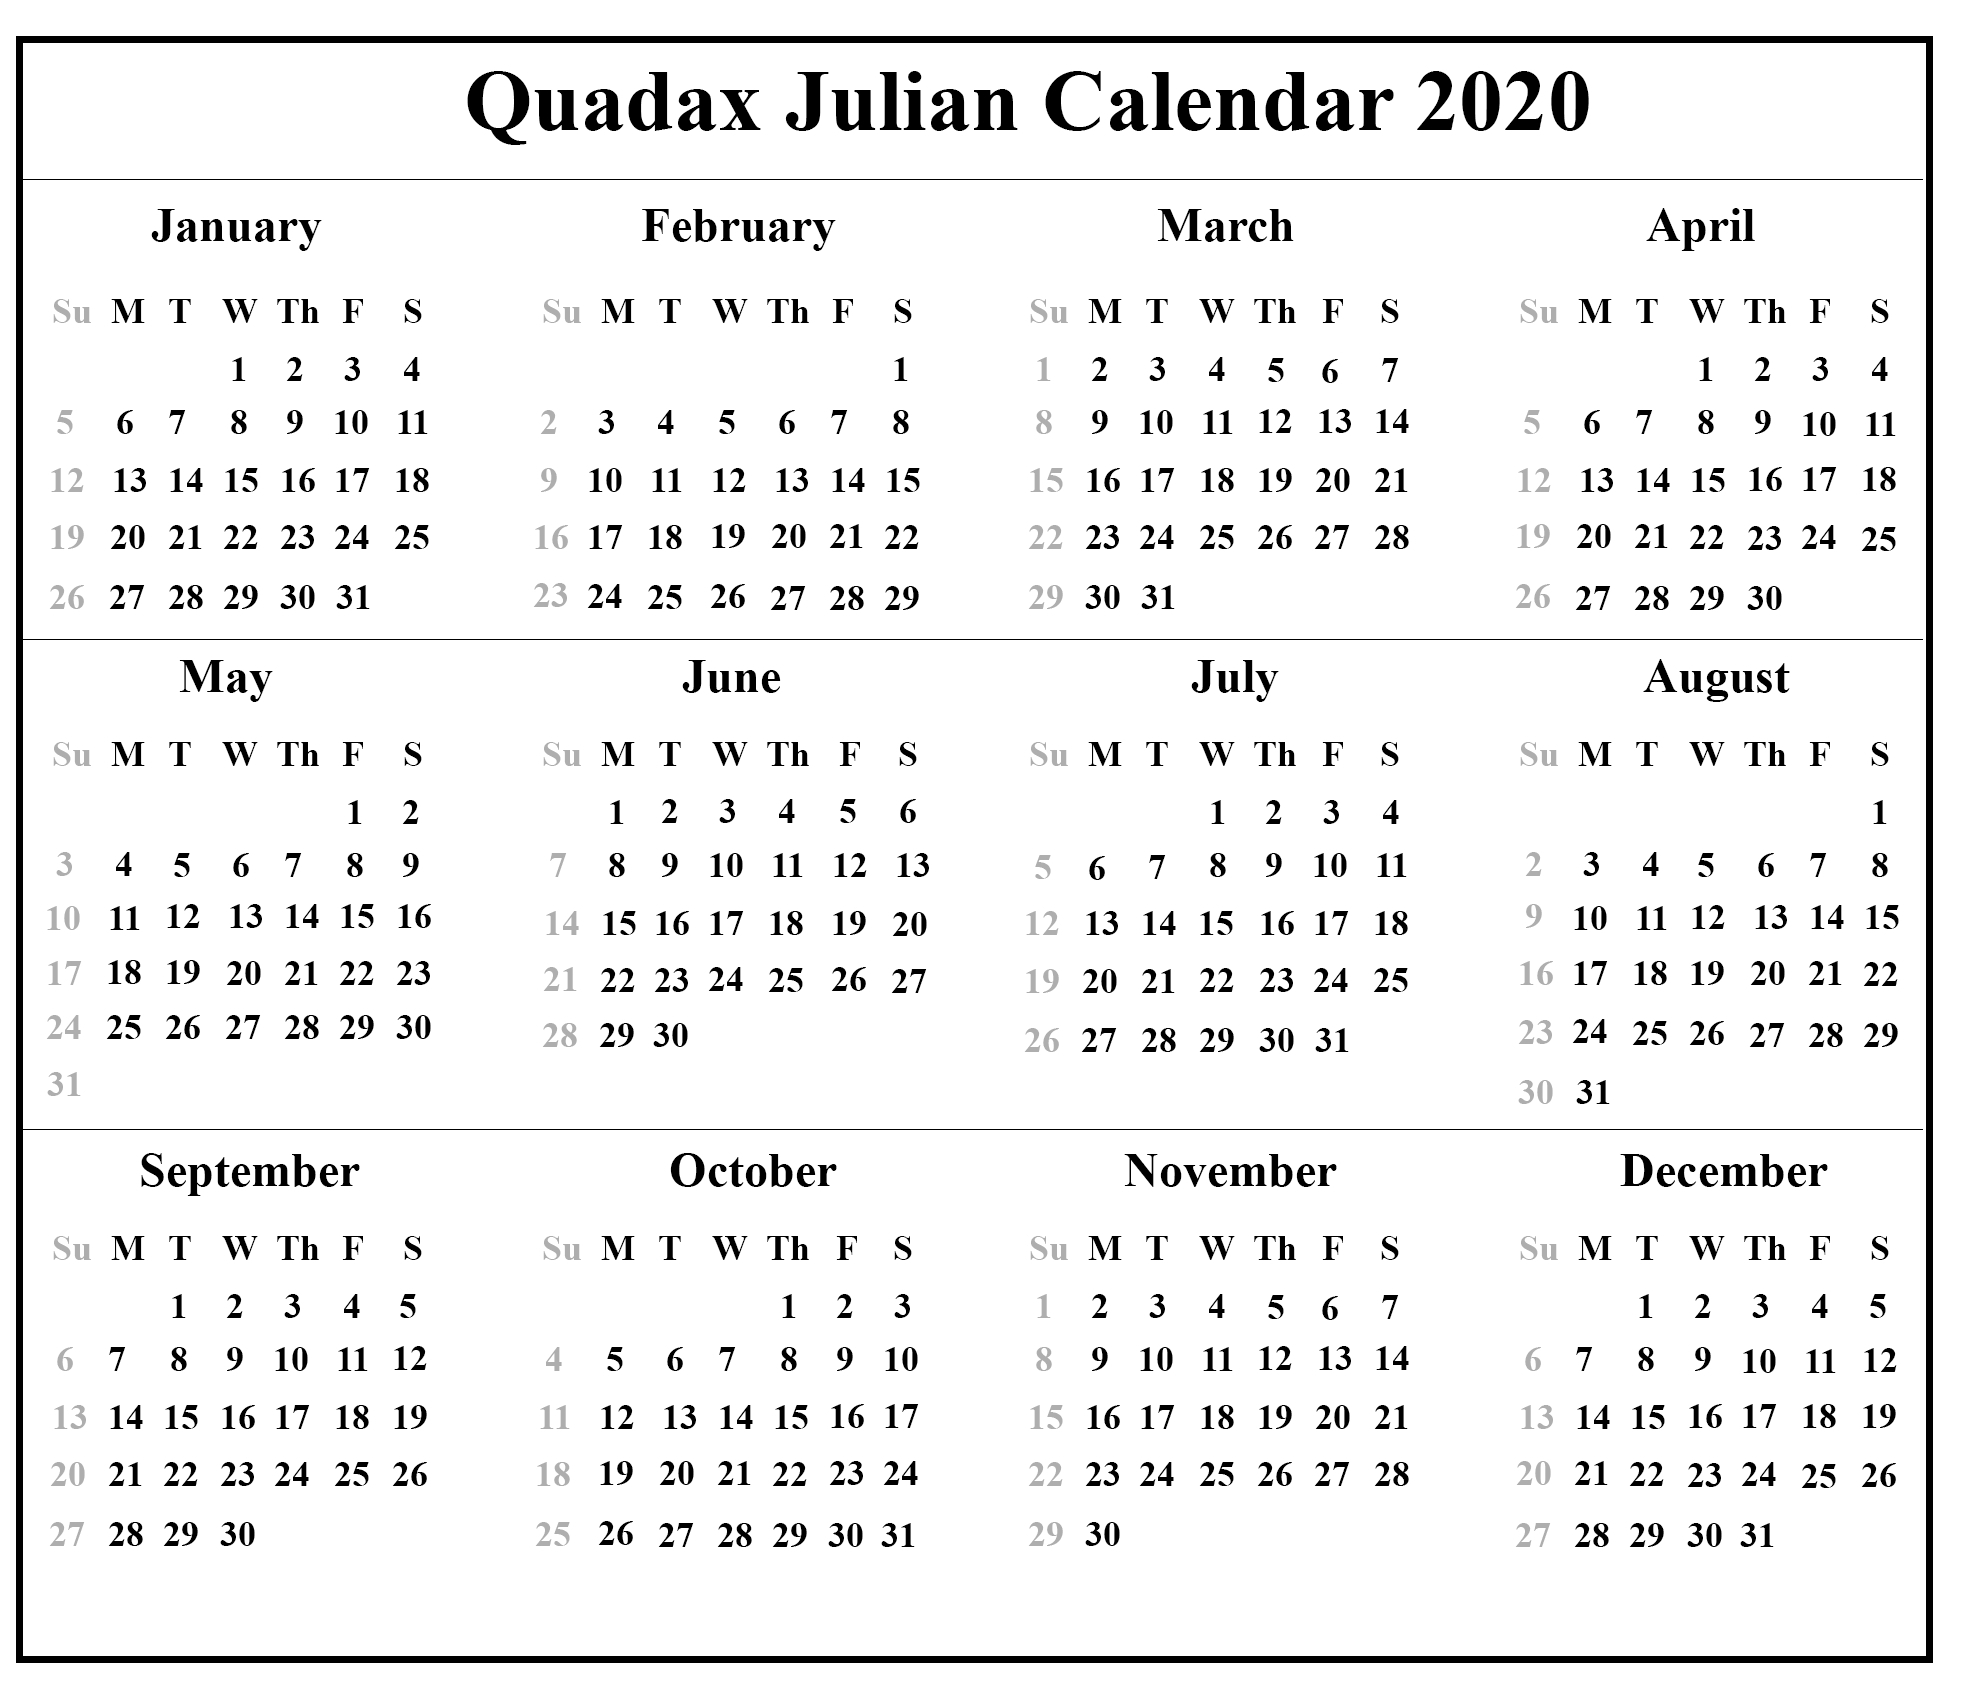 Quadax Julian Calendar 2020 Pdf | Example Calendar Printable with regard to Quadax 2020 Julian Calendar